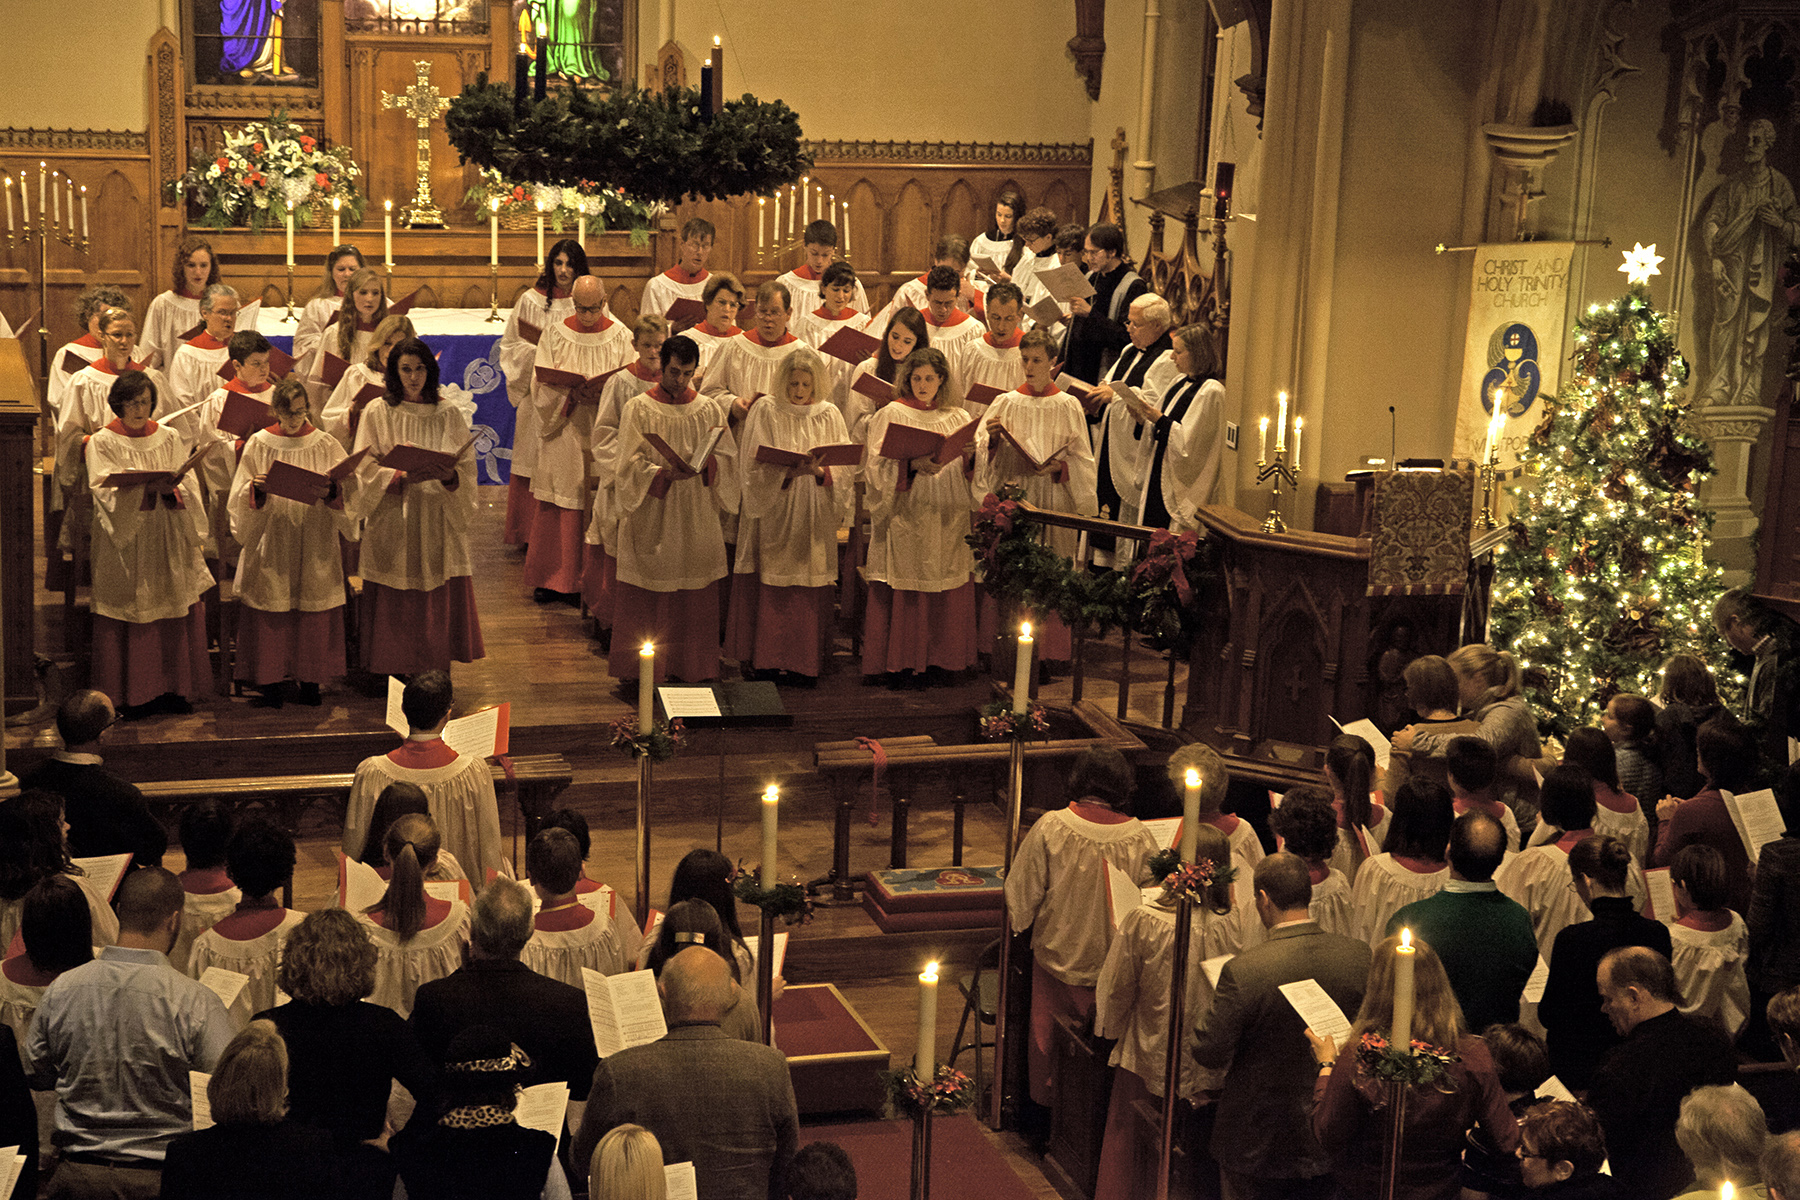 Church to hold 'Christmas Lessons & Carols'